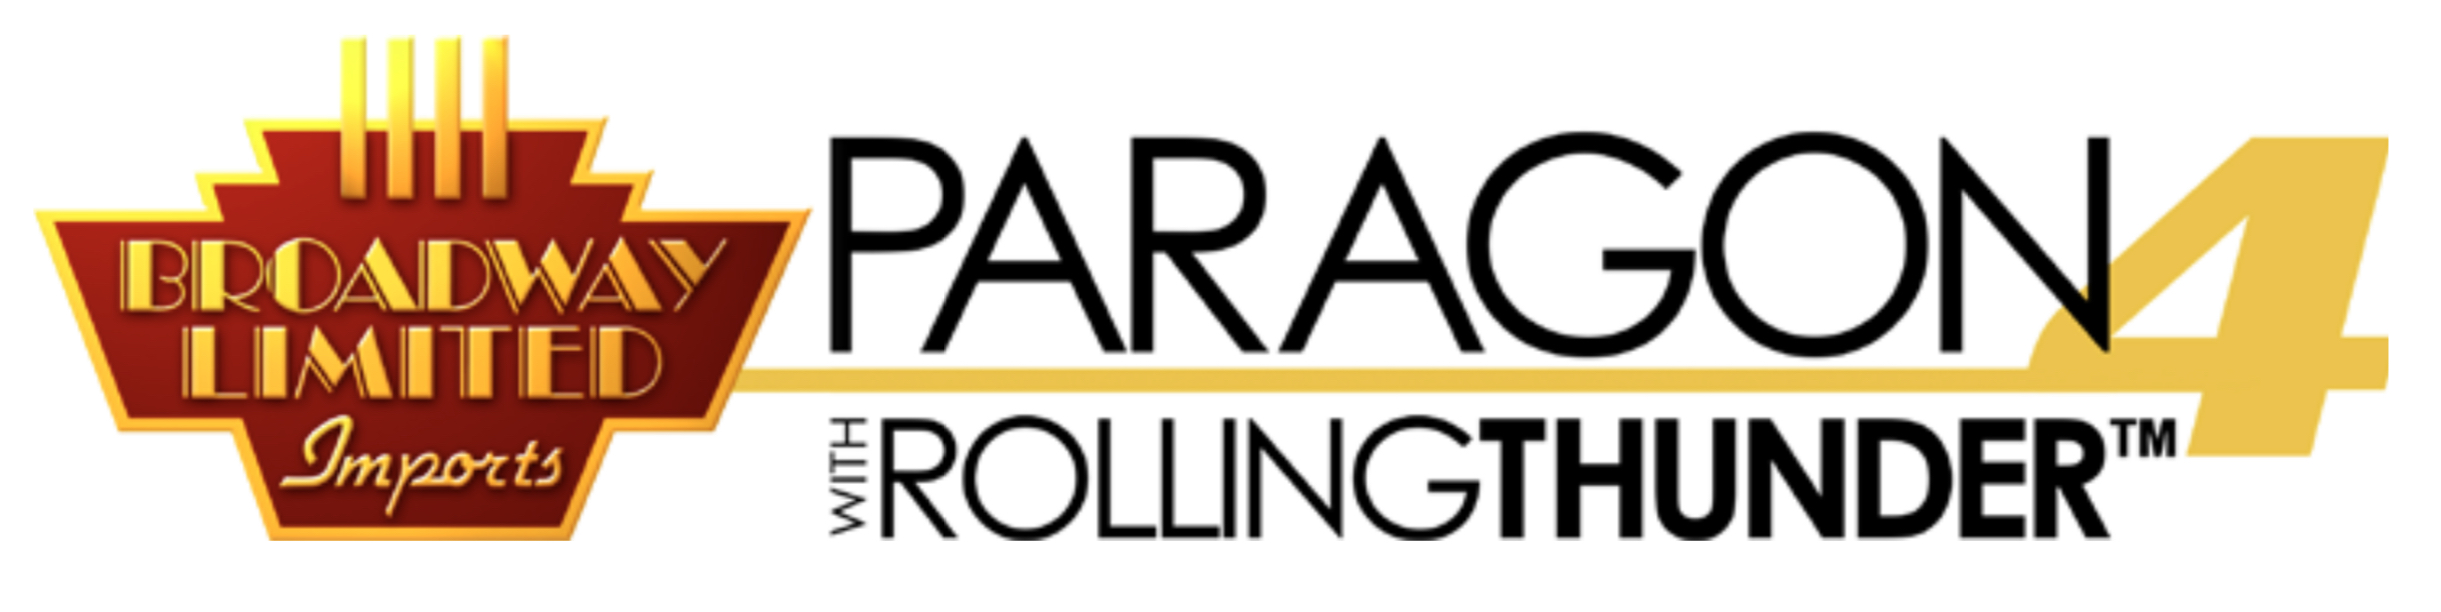 Broadway Limited Imports Paragon4 Logo